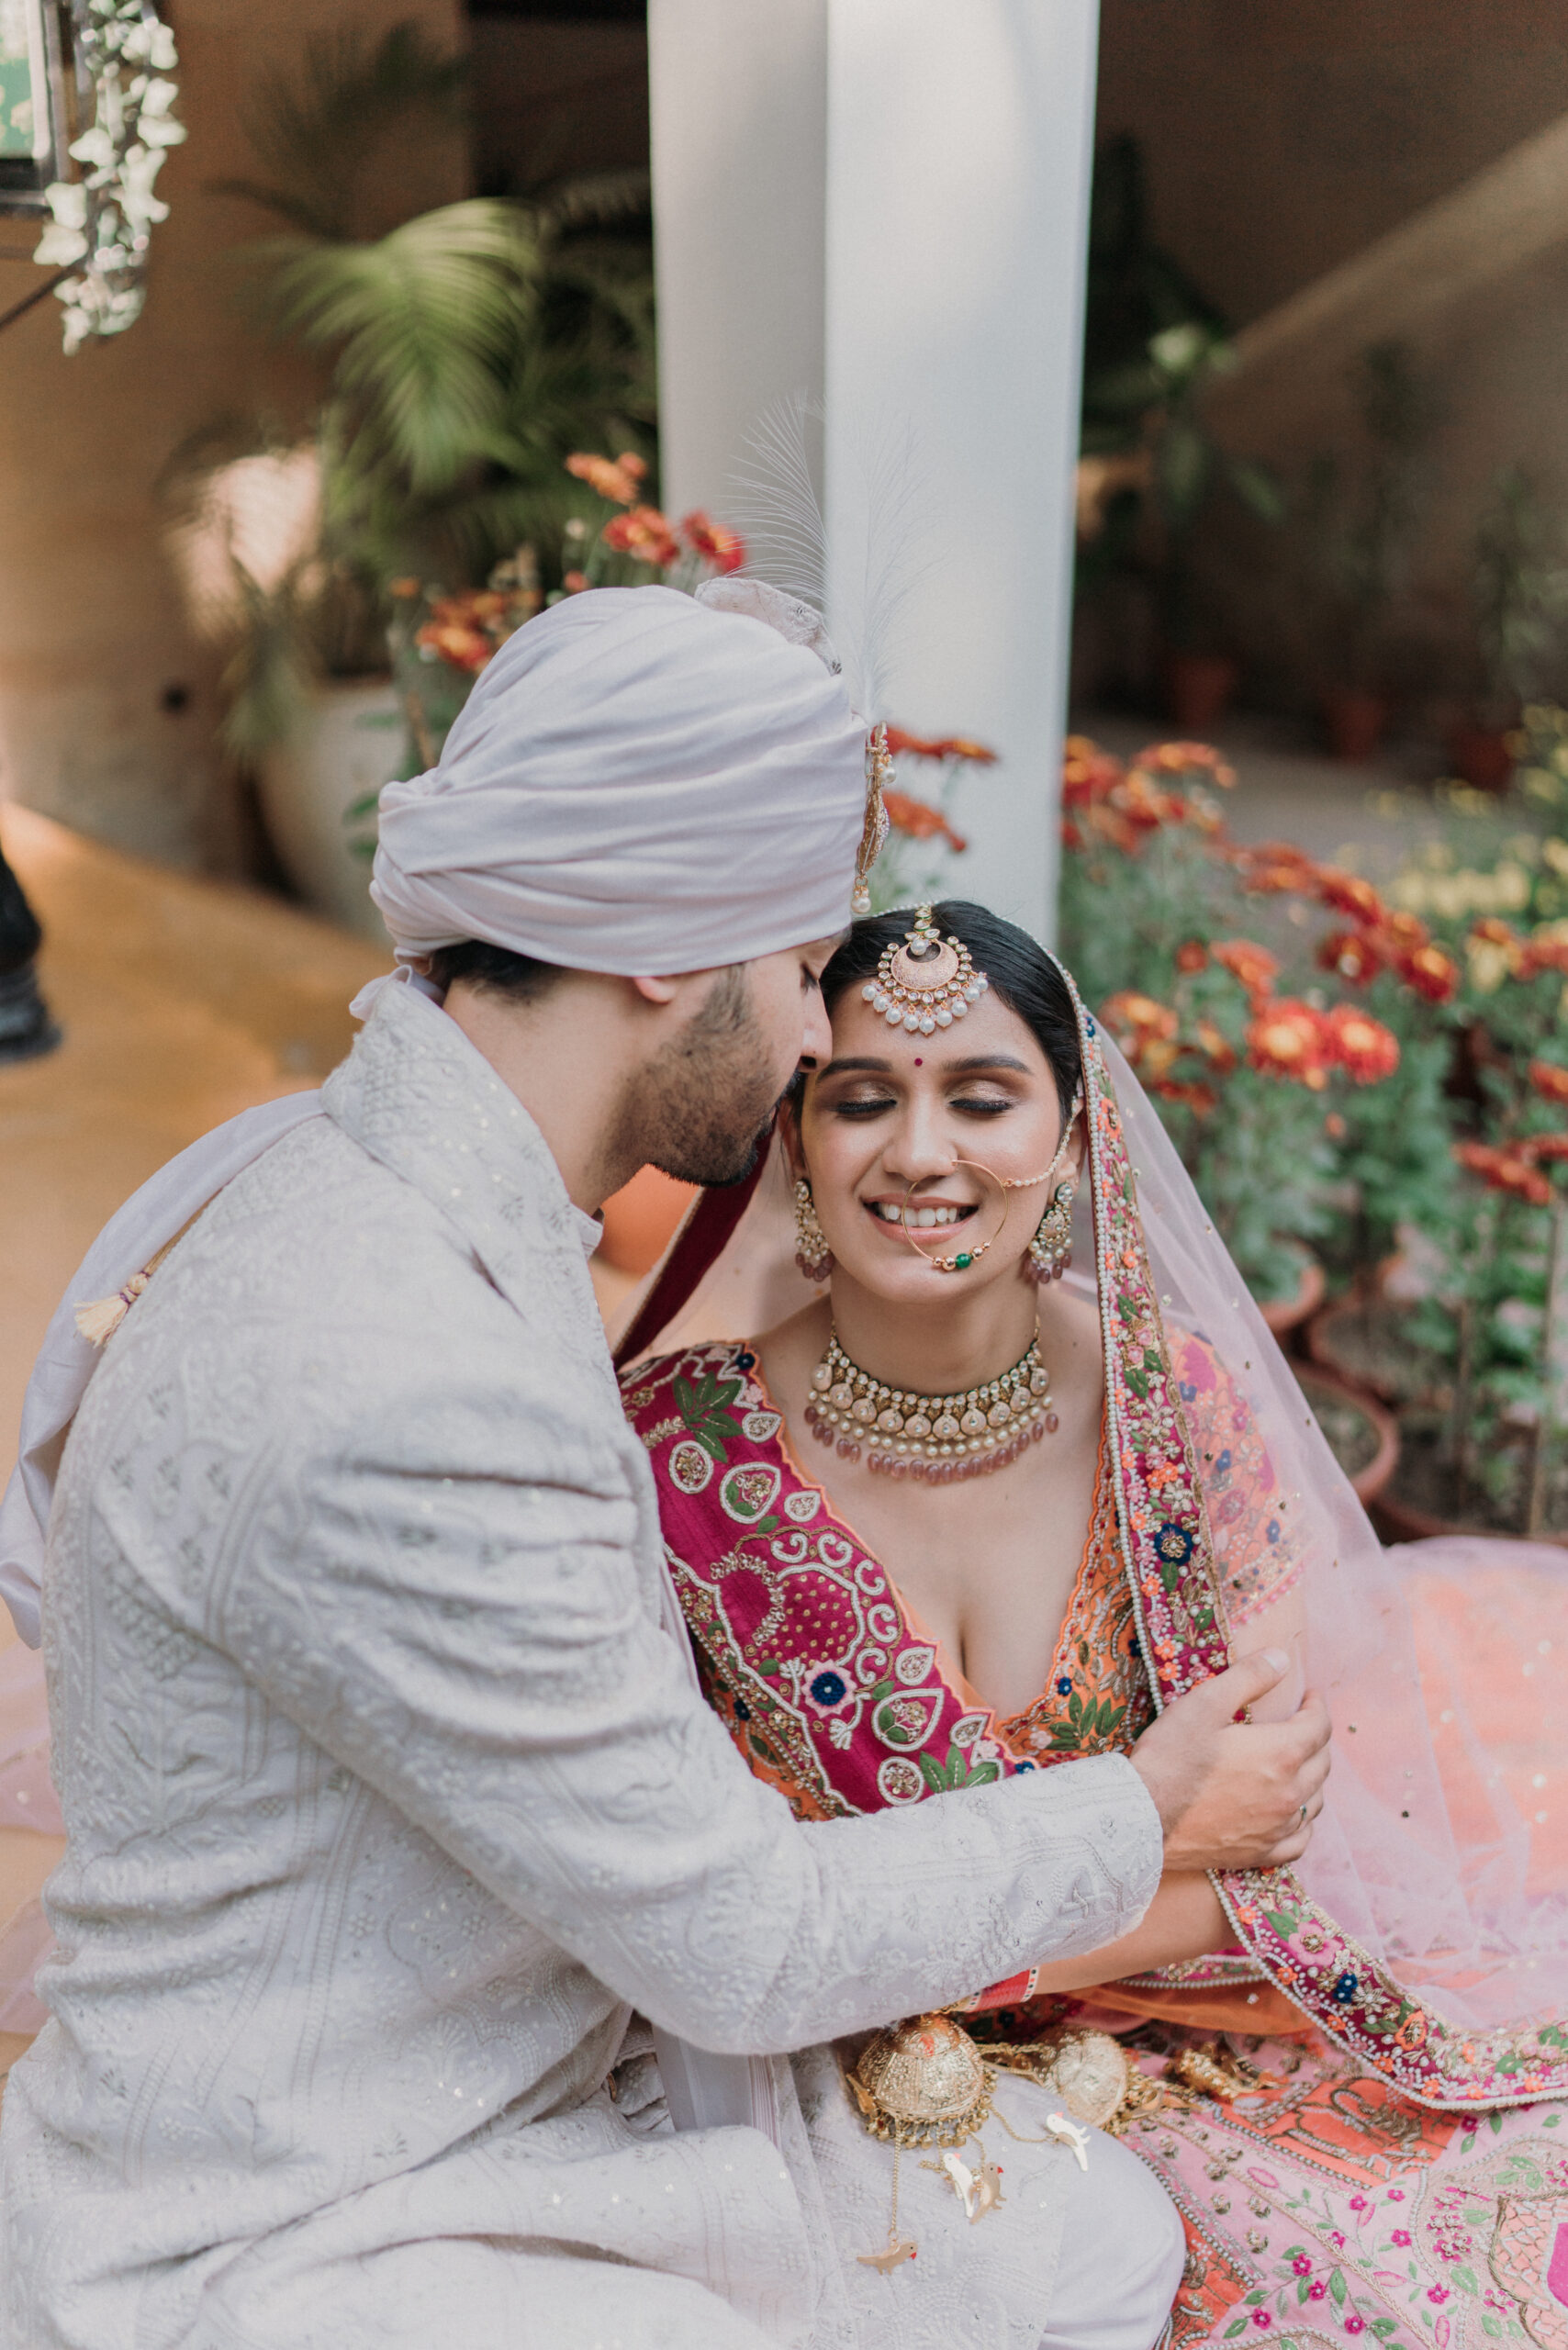 Pin by Thrifty Neighborhood on Wedding dresses | Indian wedding bride,  Traditional indian wedding, Indian wedding photography couples